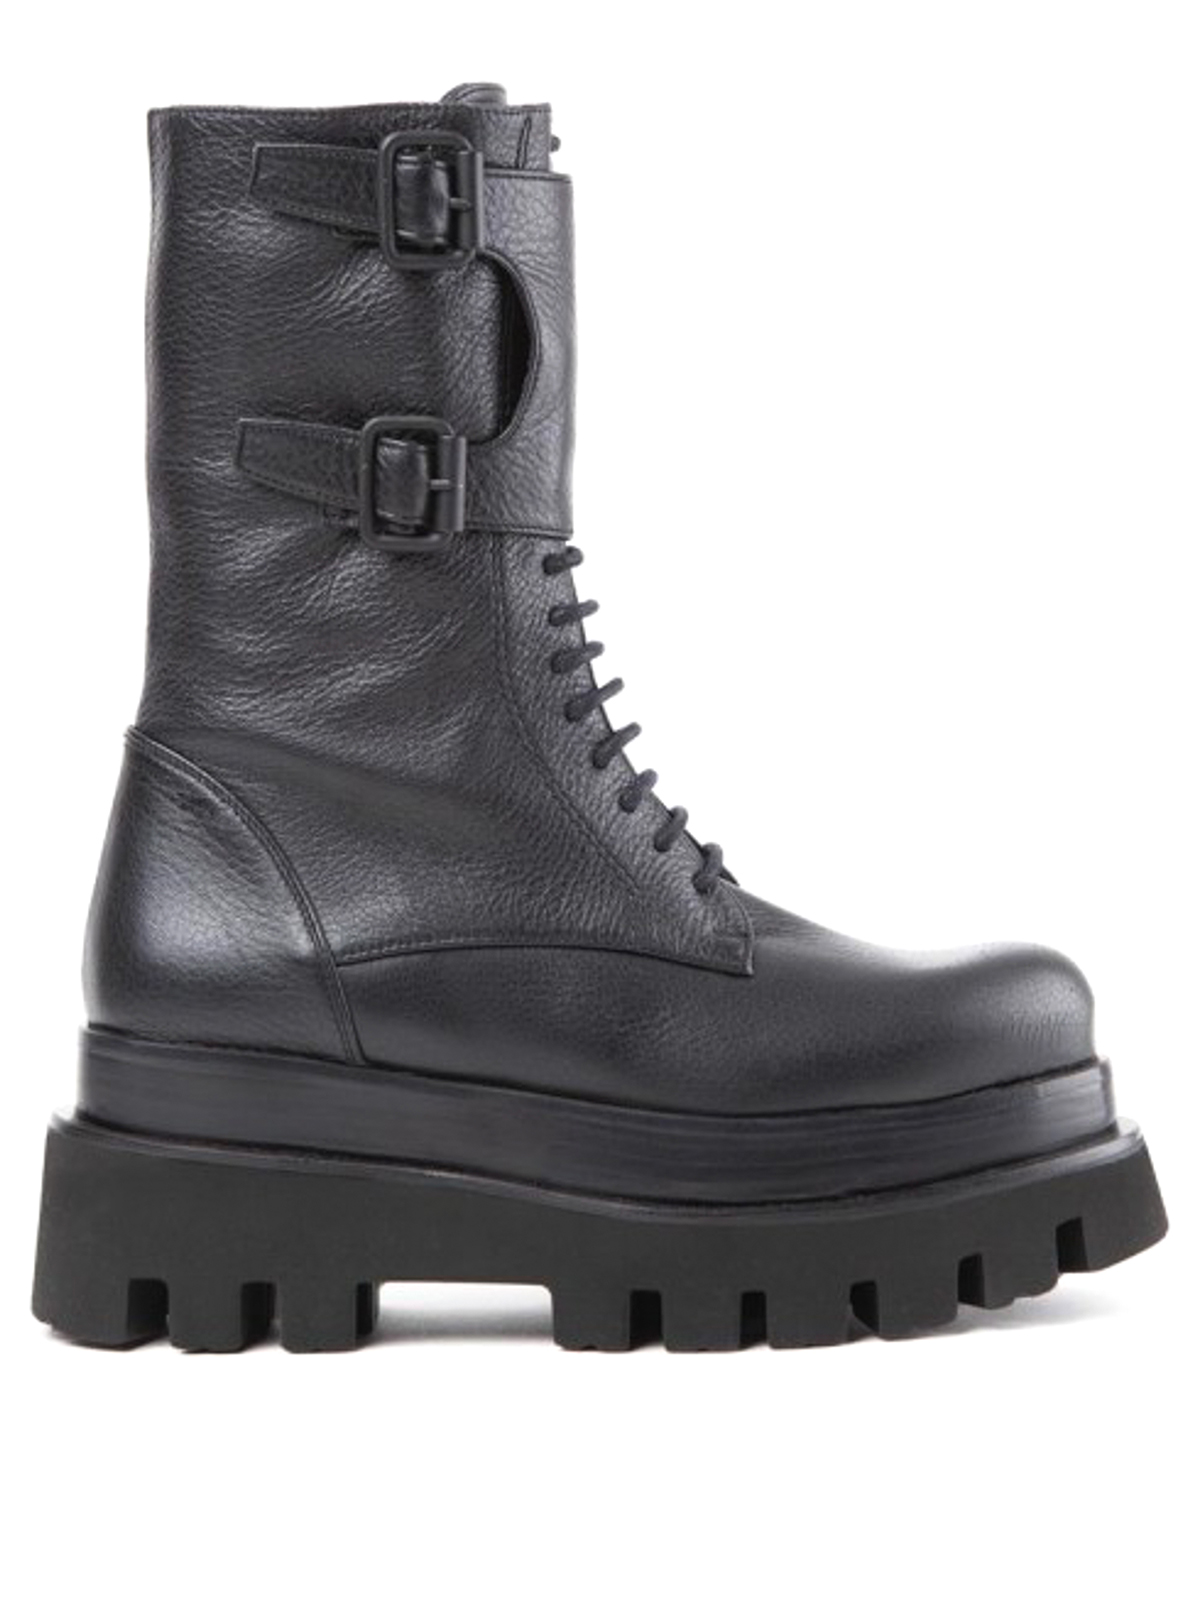 Boots Paloma Barcelò - Leather boots - ALDABLACK | Shop online at iKRIX